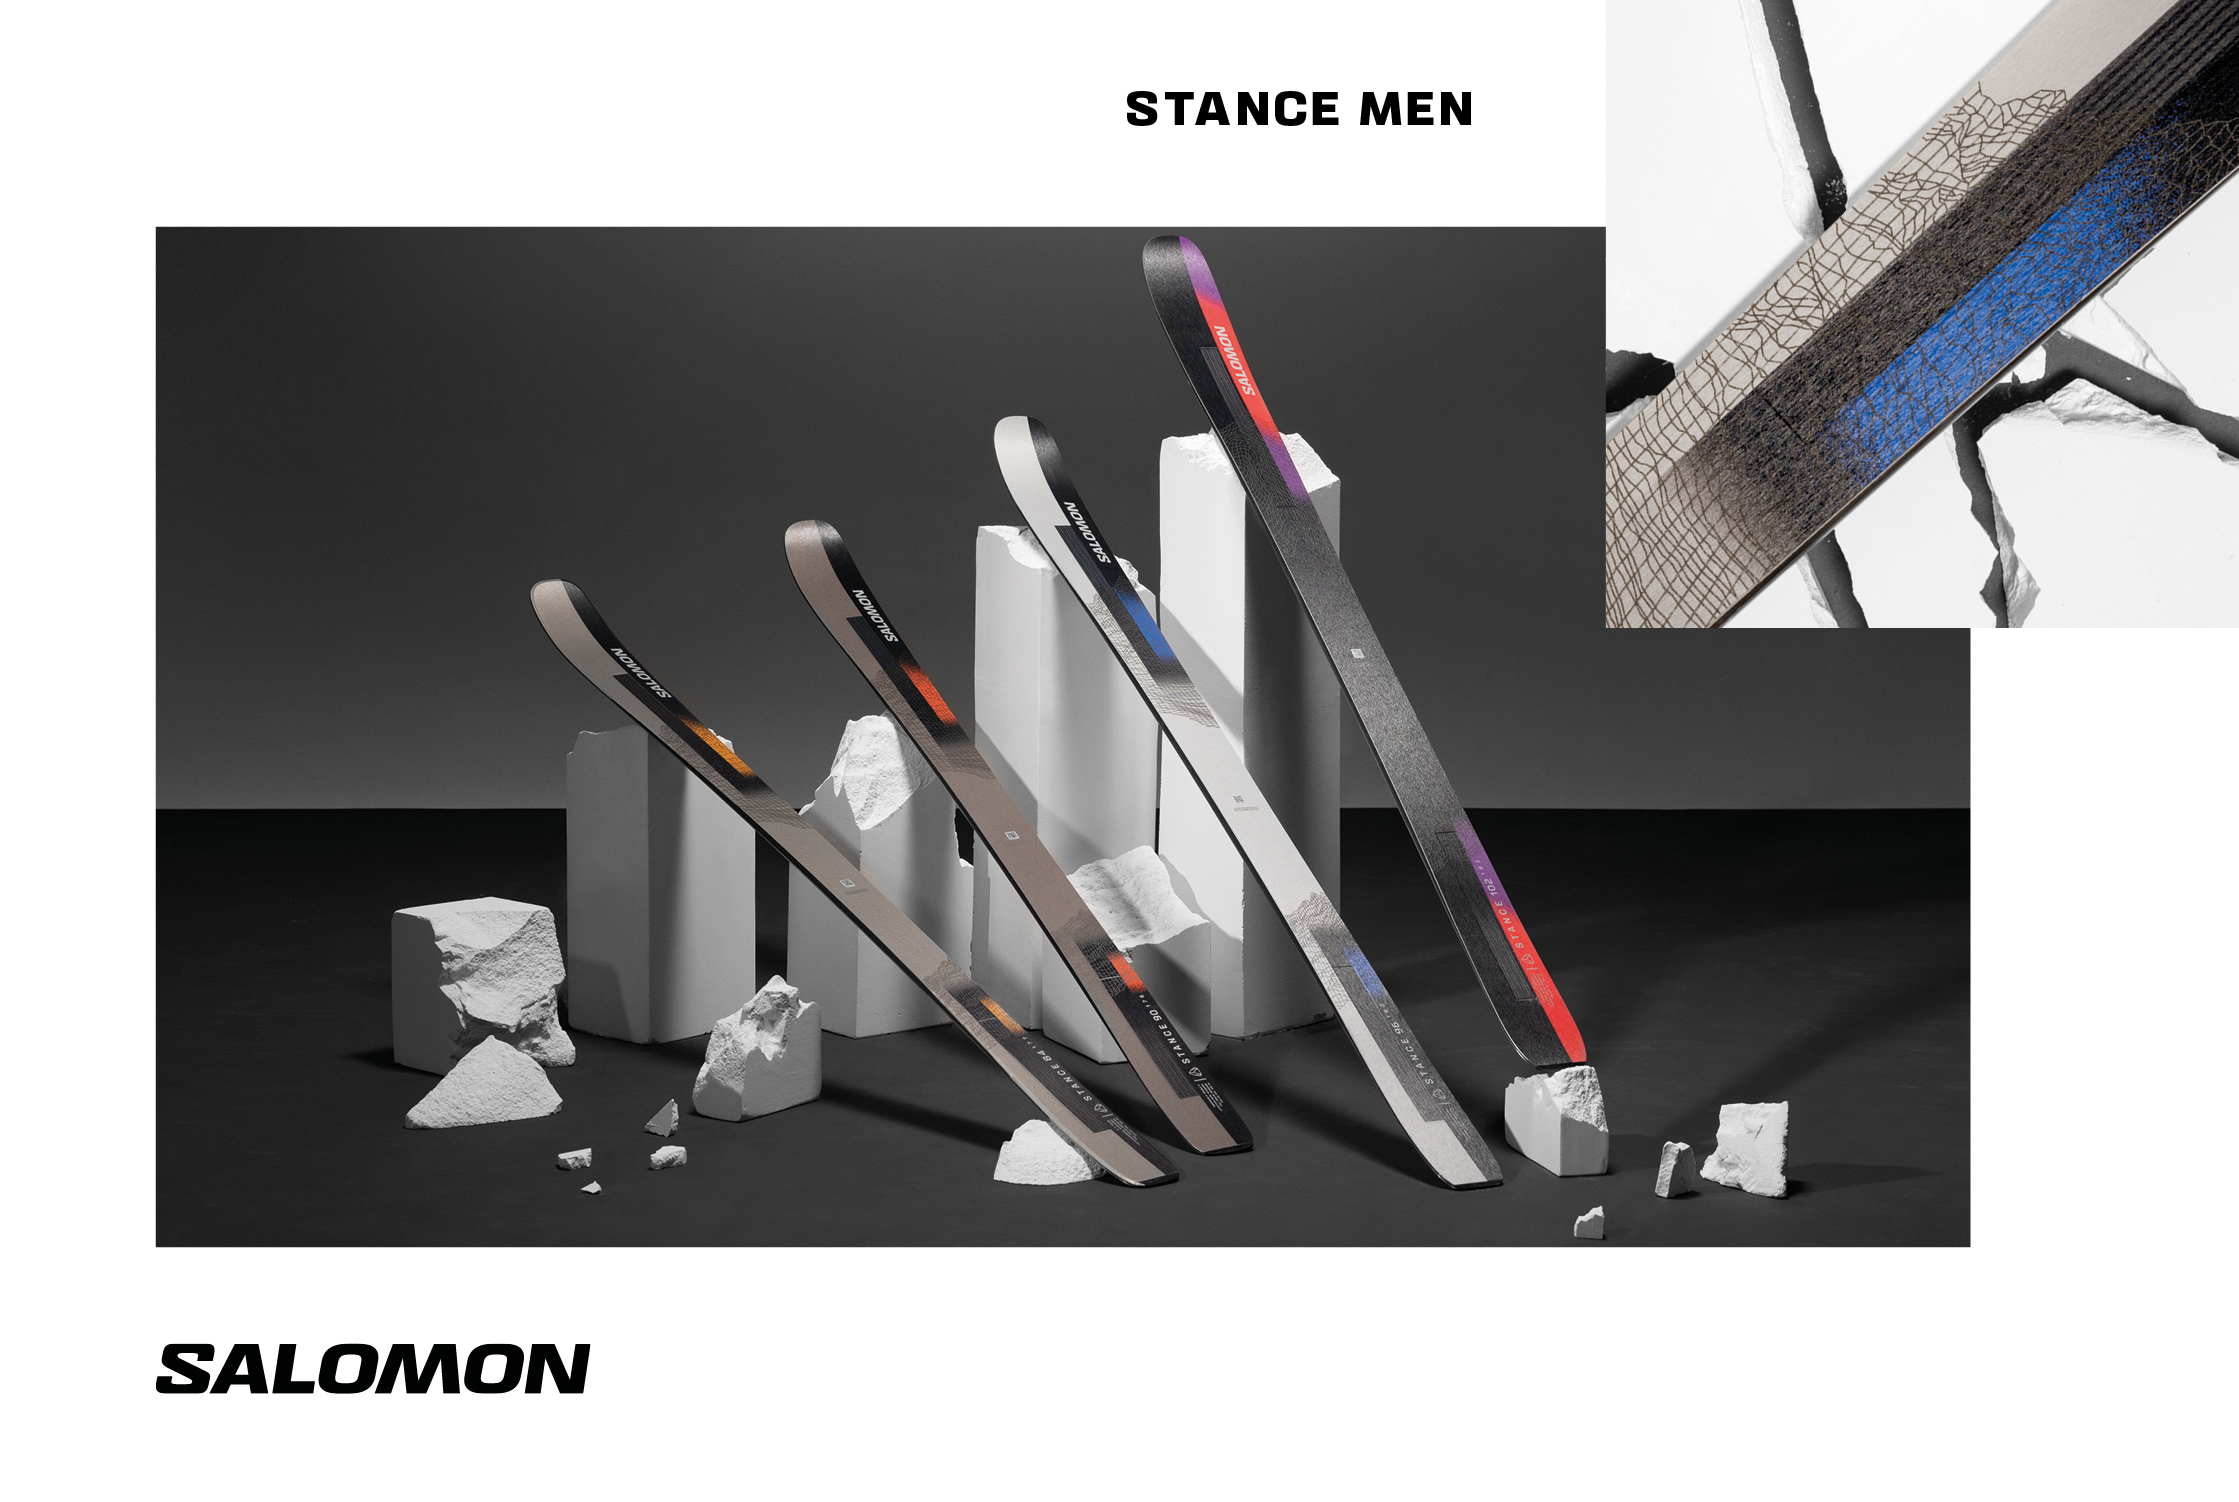 salomon Stance Men range skis